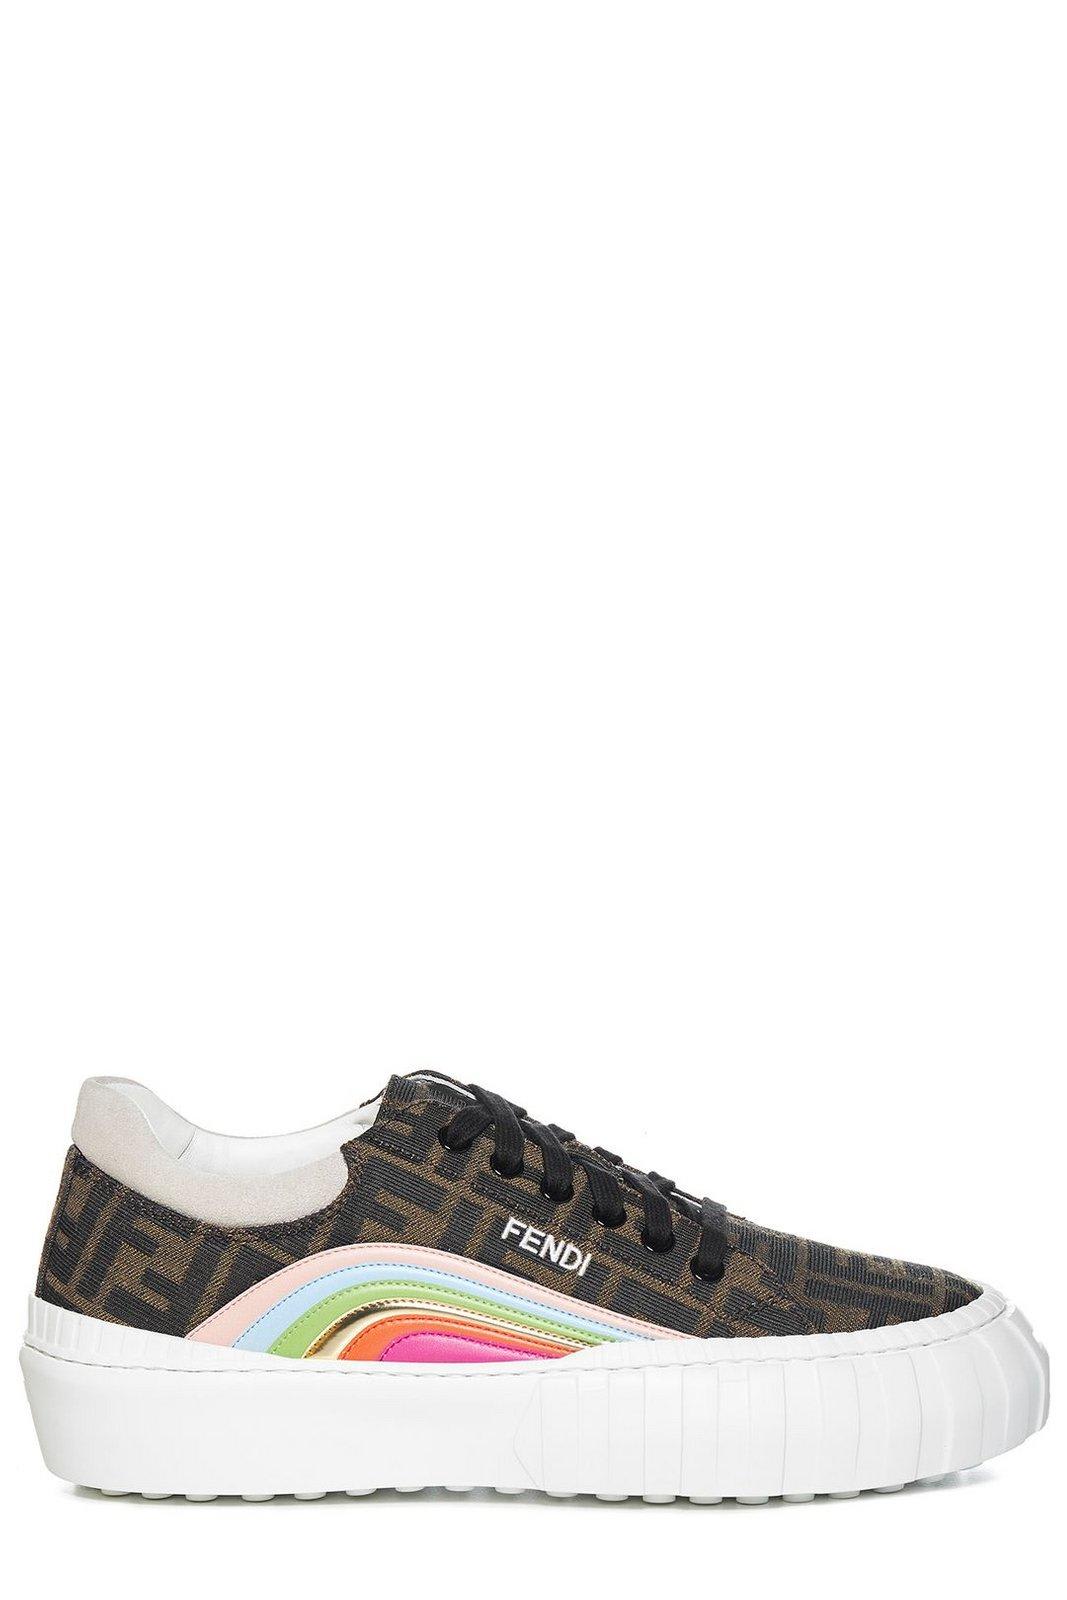 Fendi Monogram Lace-up Sneakers